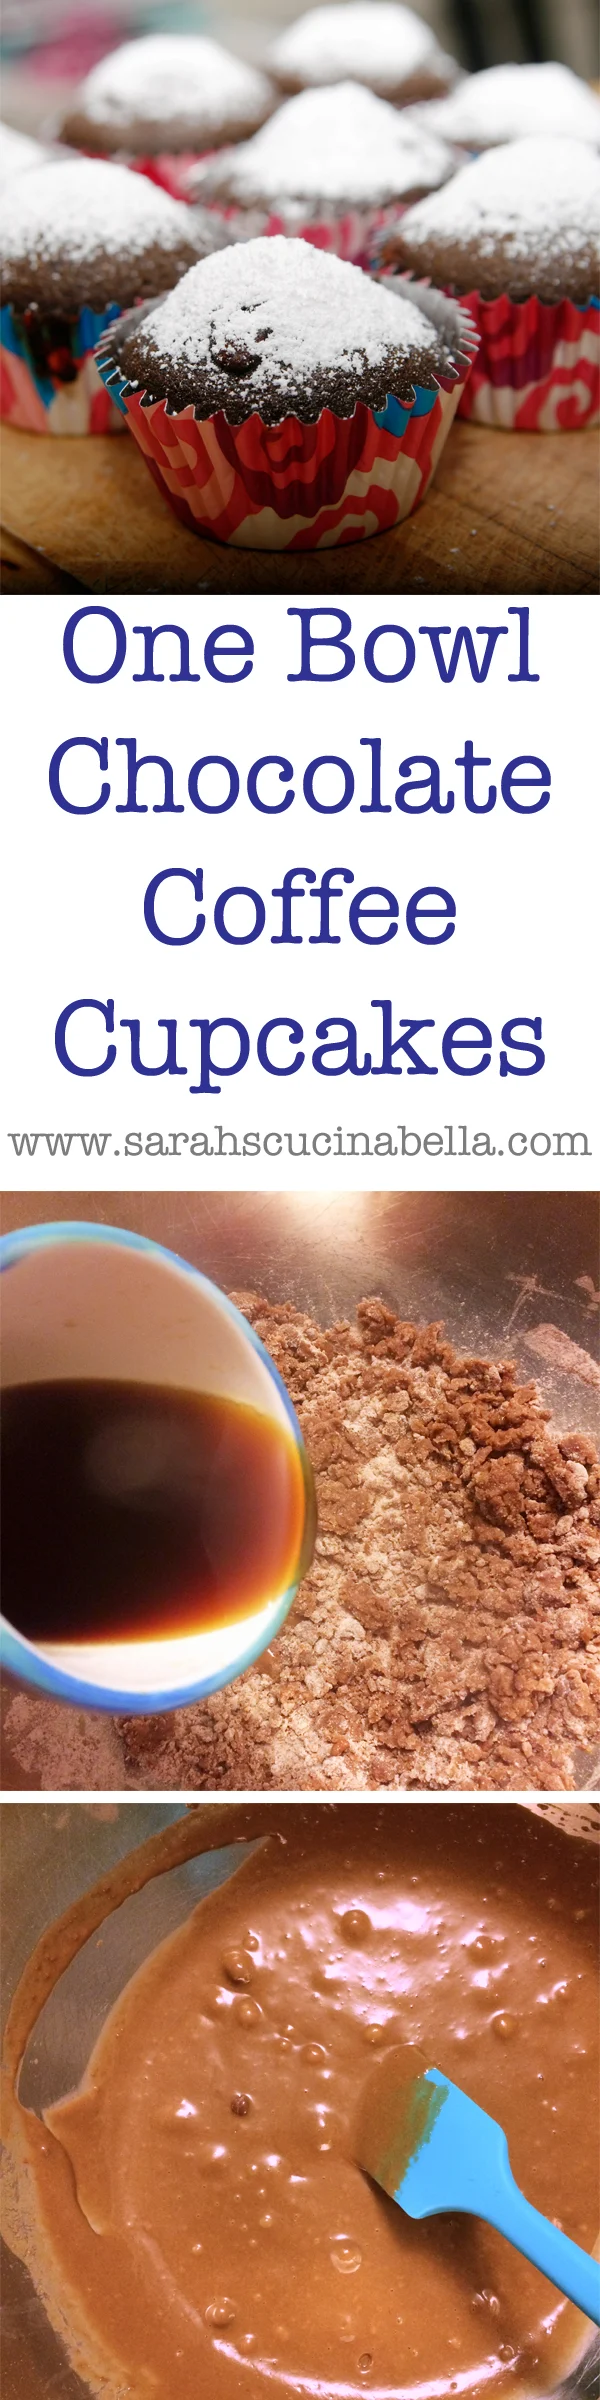 One Bowl Chocolate Coffee Cupcakes